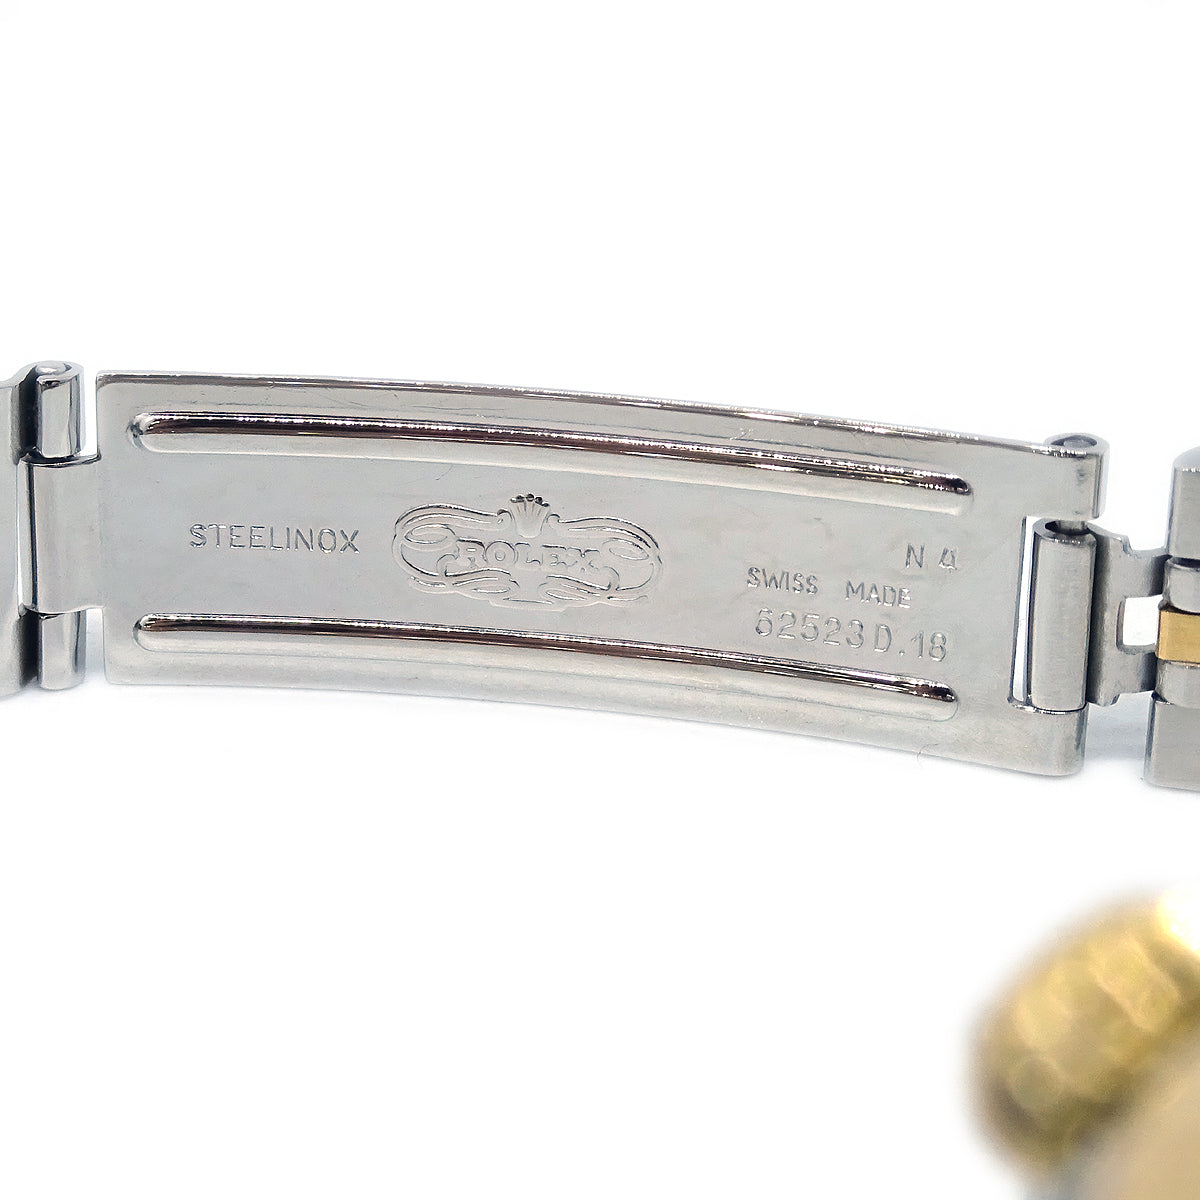 Rolex Oyster Perpetual Datejust 26mm Ref.79173G Watch 18KYG SS Diamond